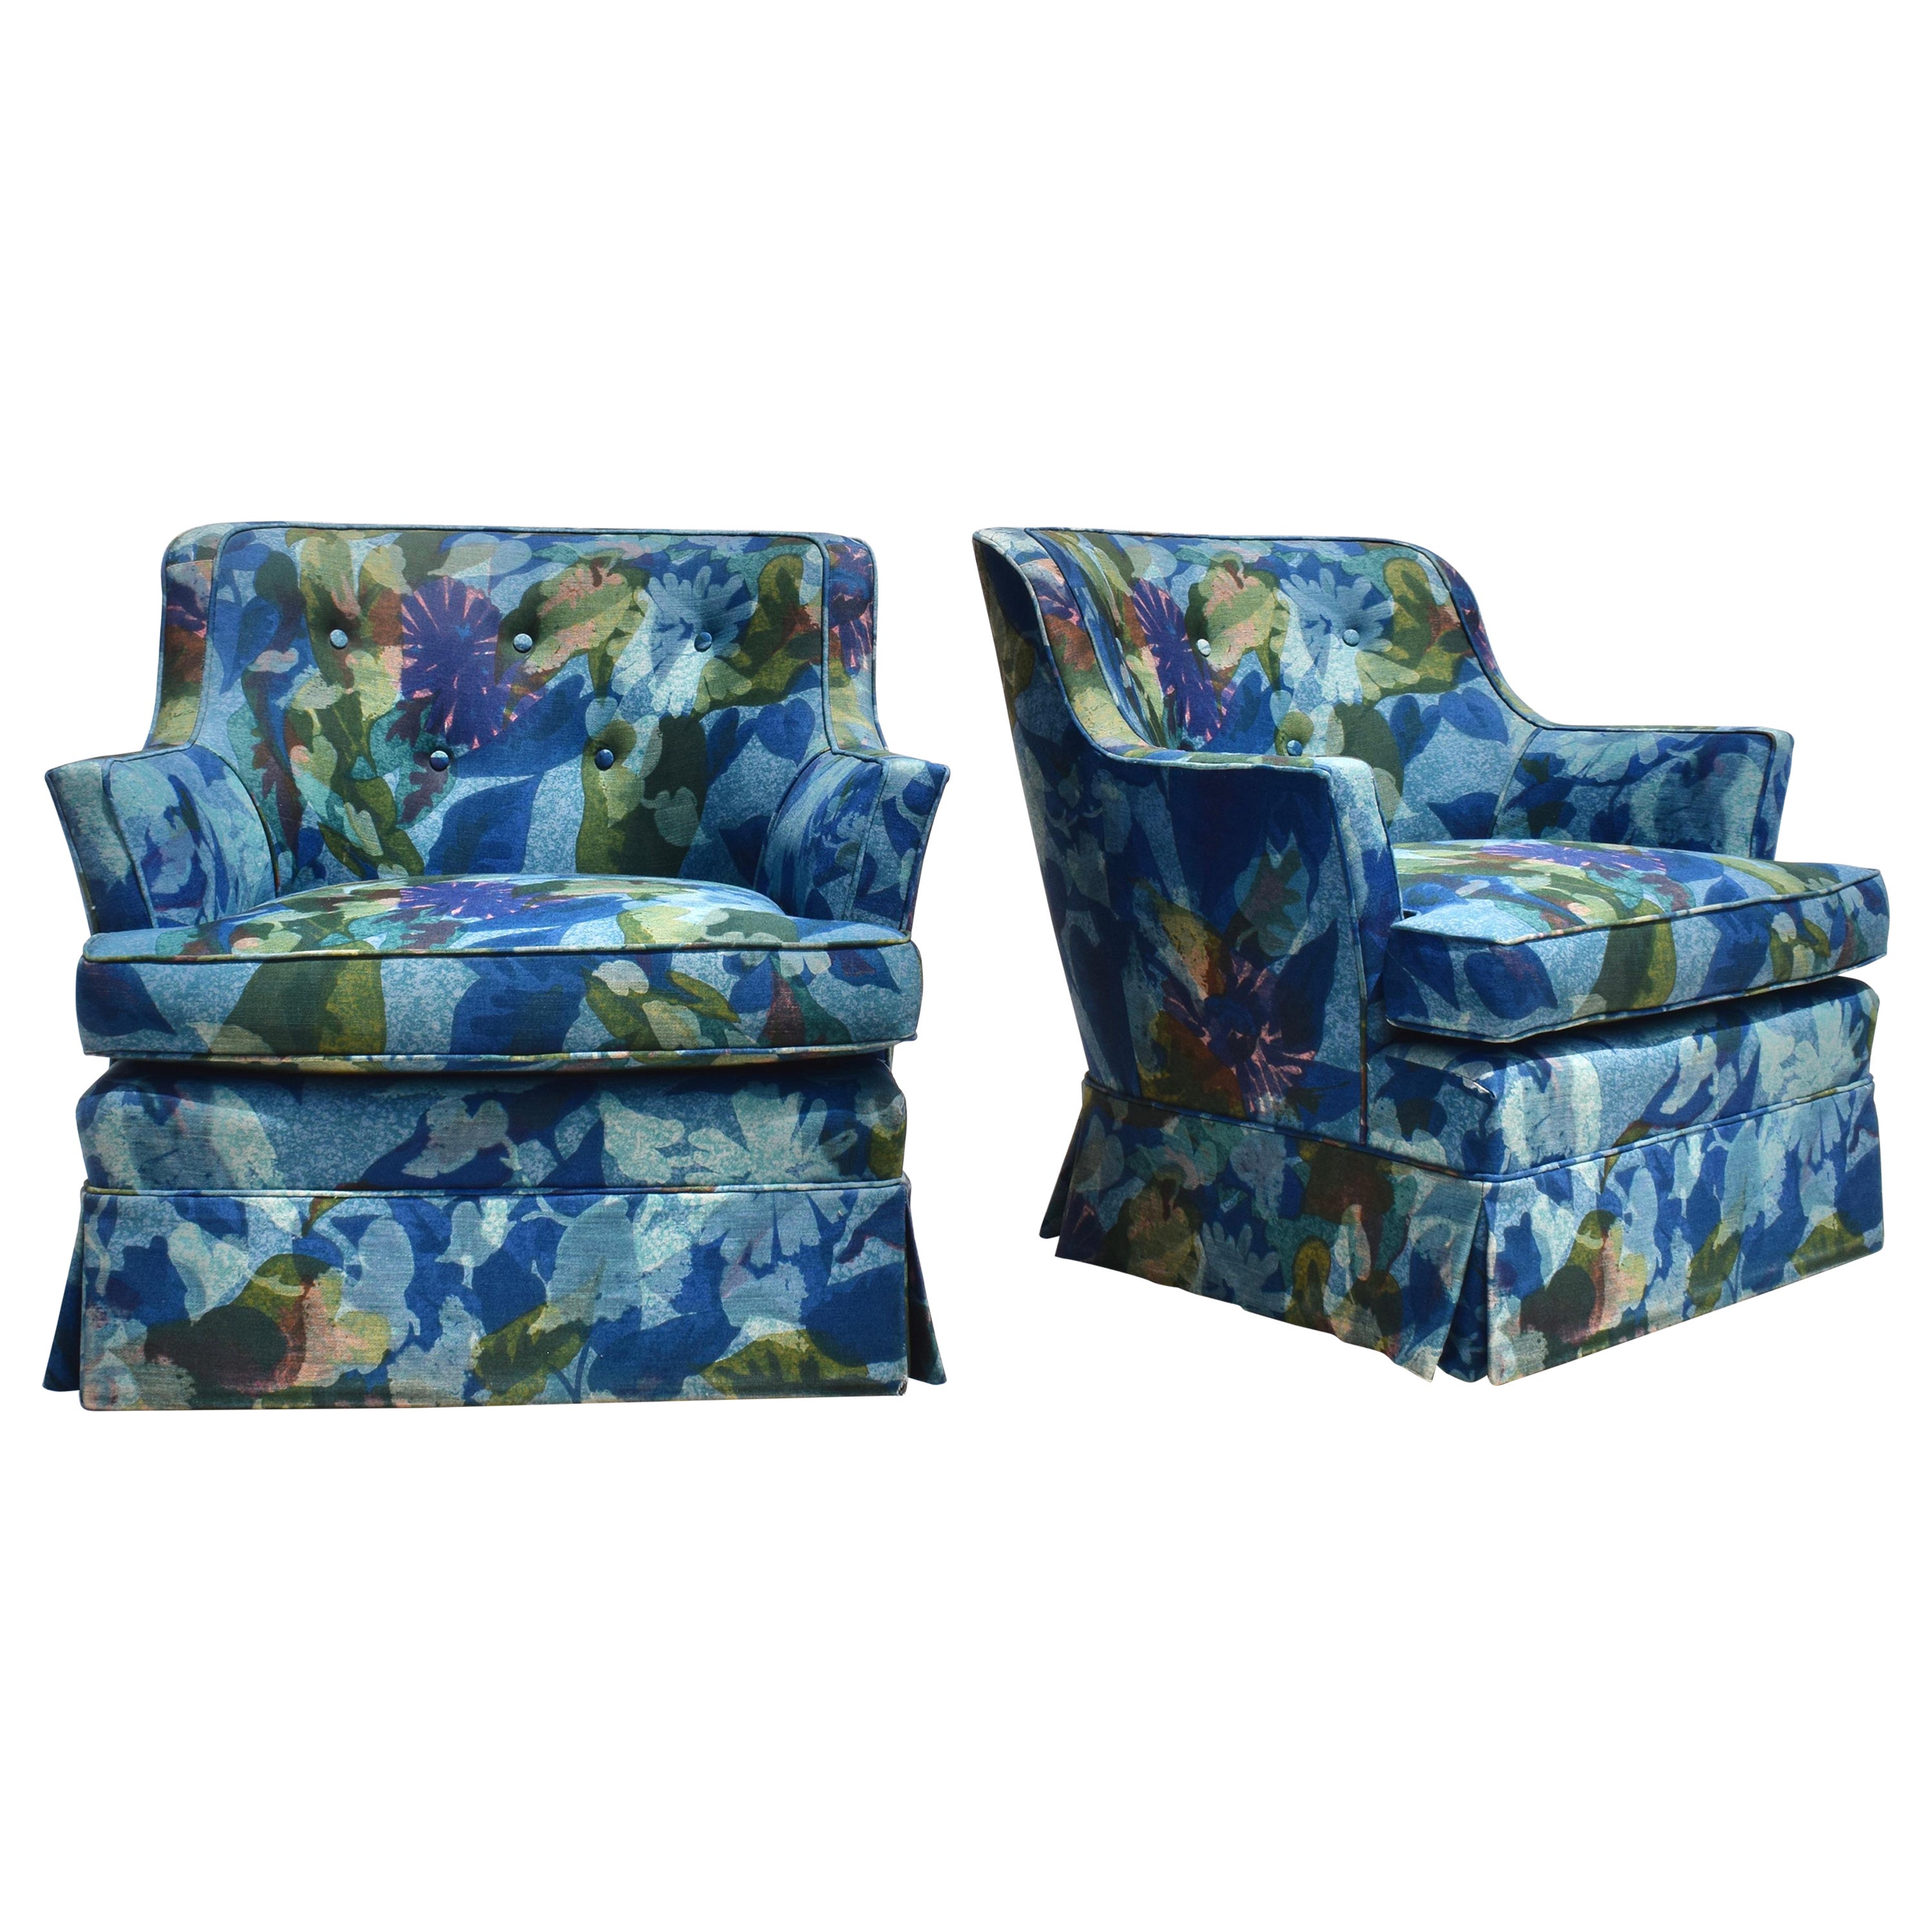 Edward Wormley Dunbar Swivel Chairs in Jack Lenor Larsen Floral Upholstery